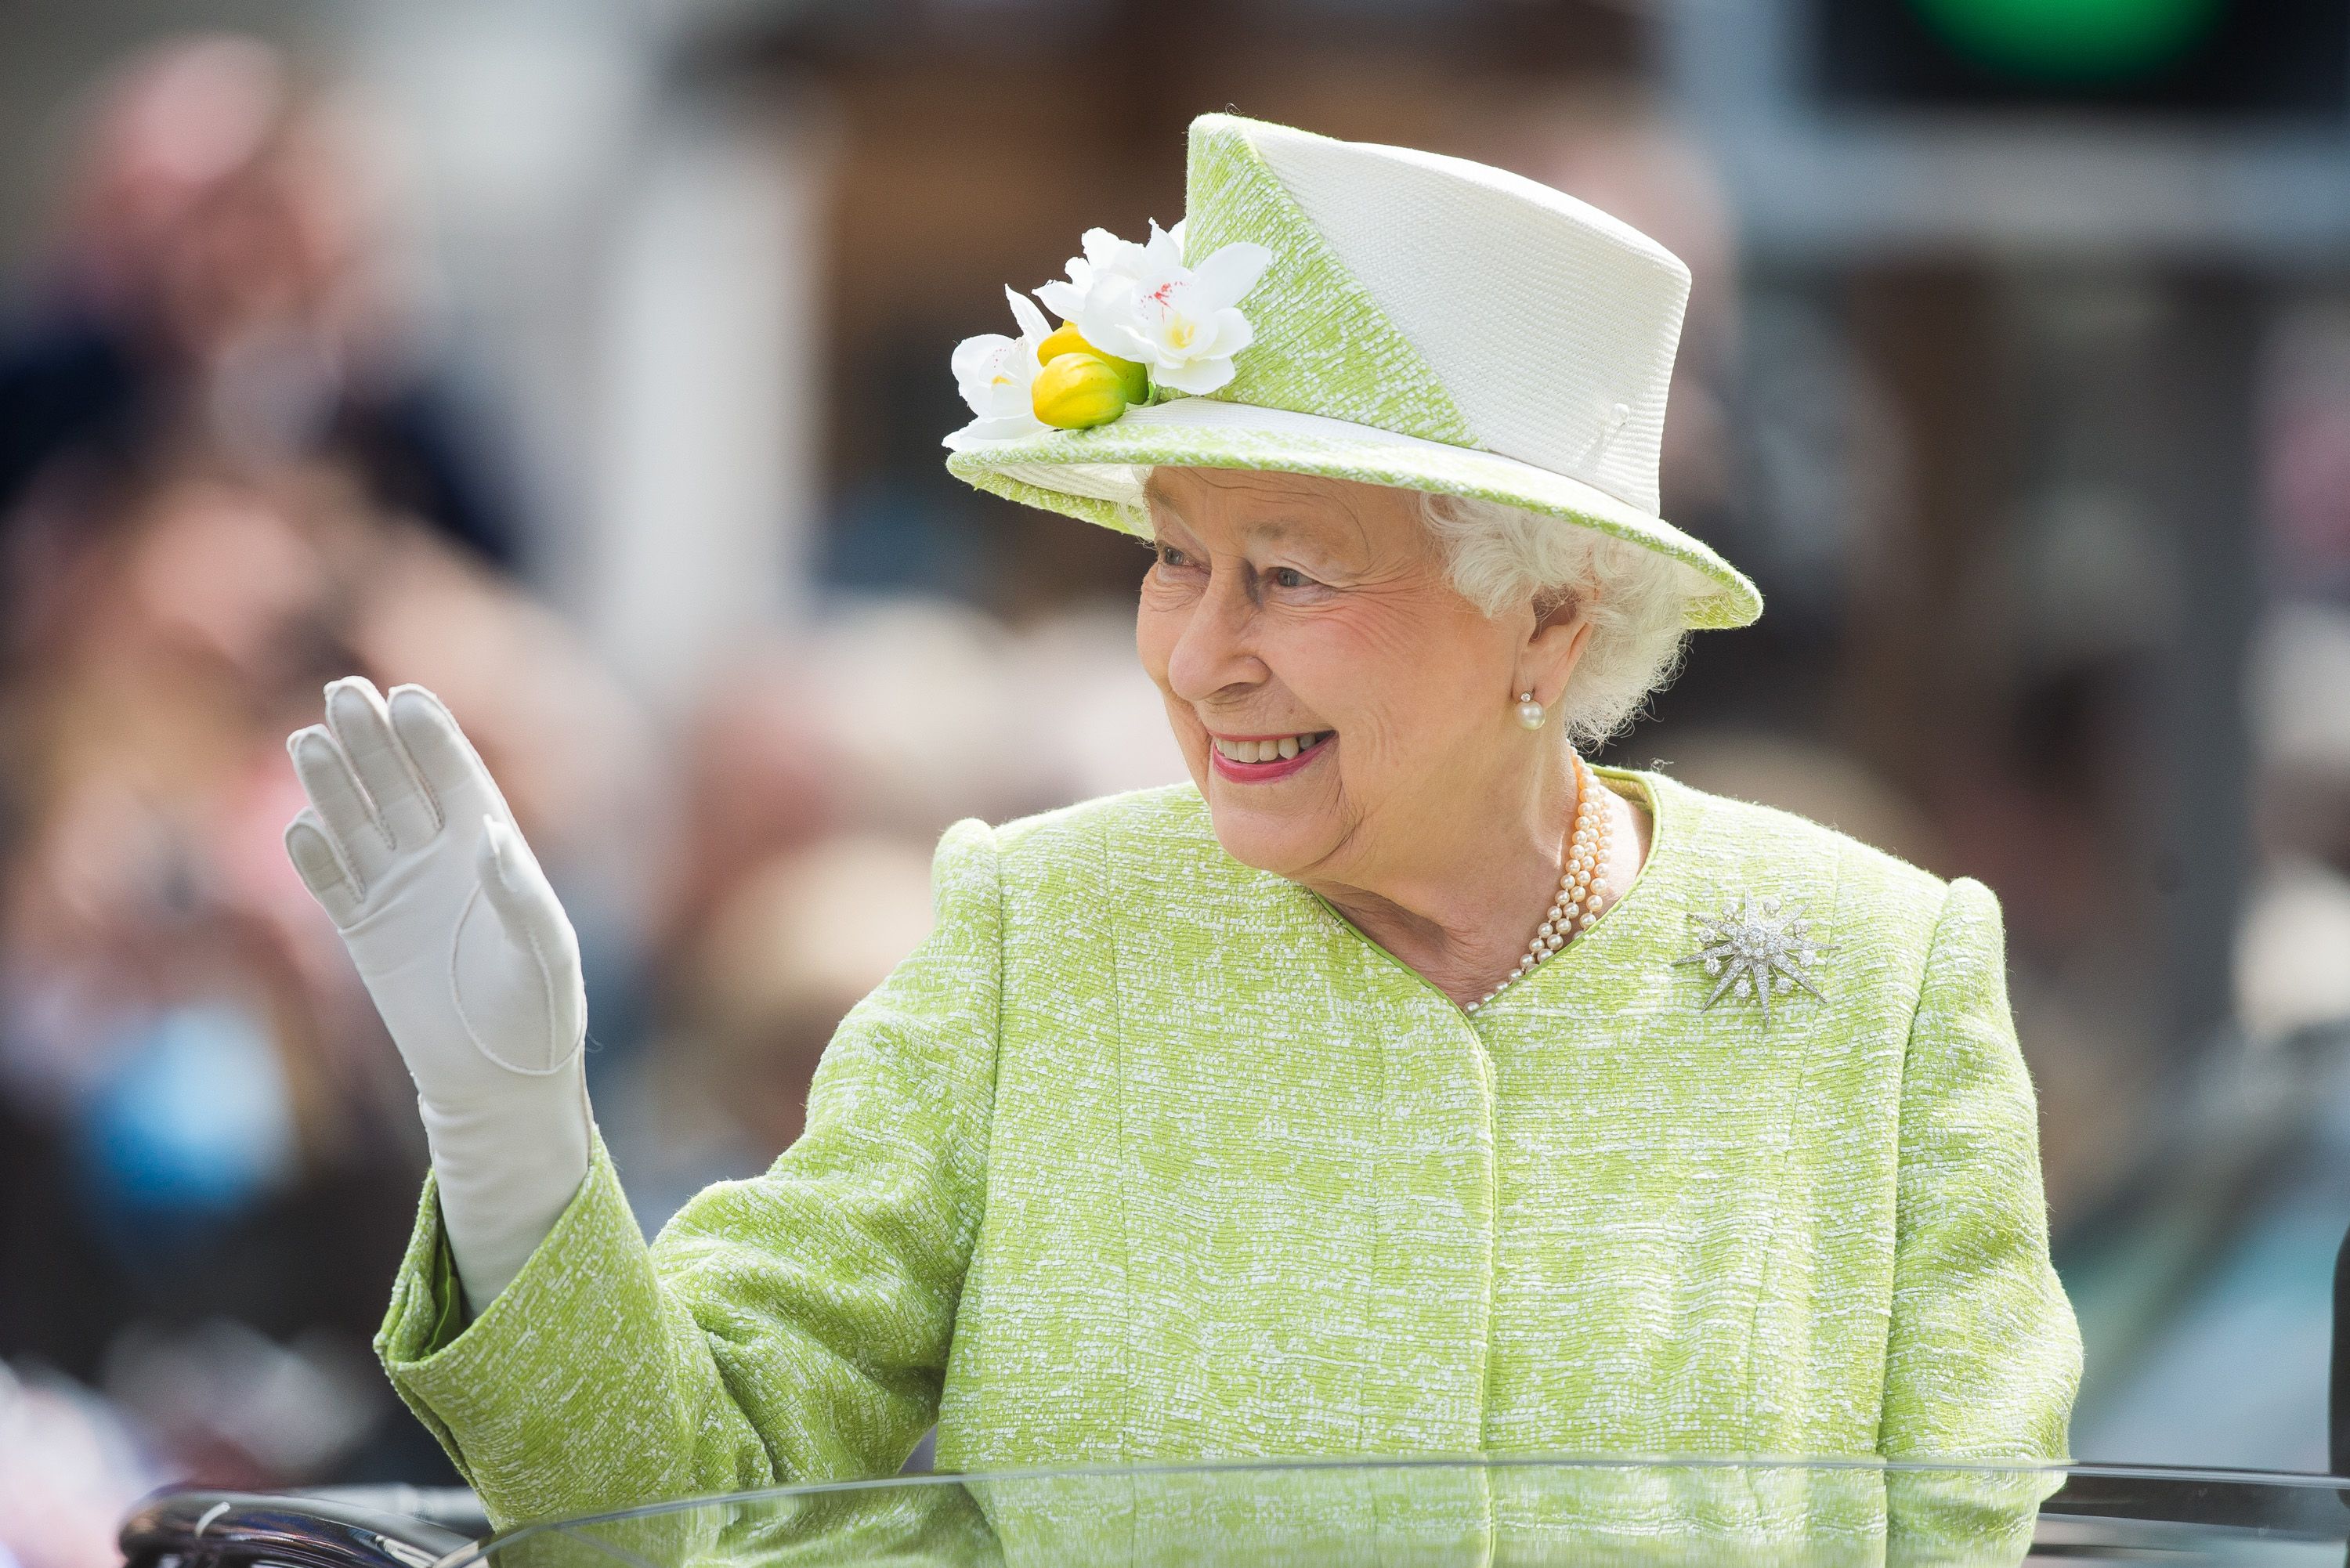 Queen Elizabeth waving he hand wearing pastel green outfit